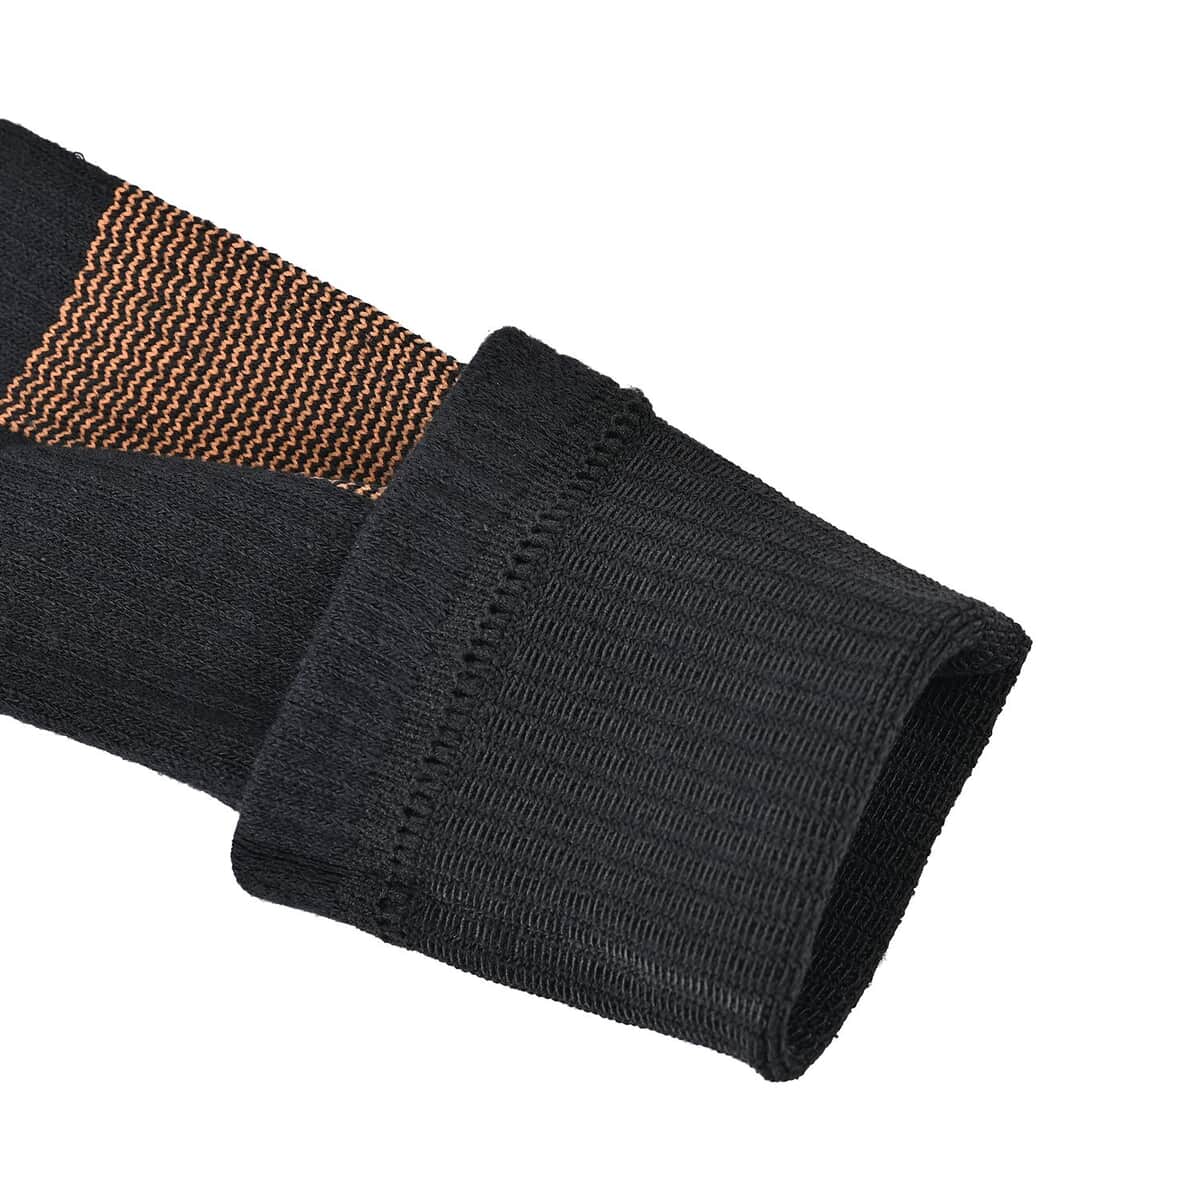 Set of 4 Pairs Knee Length Copper Infused Compression Socks - Black (L/XL) image number 4